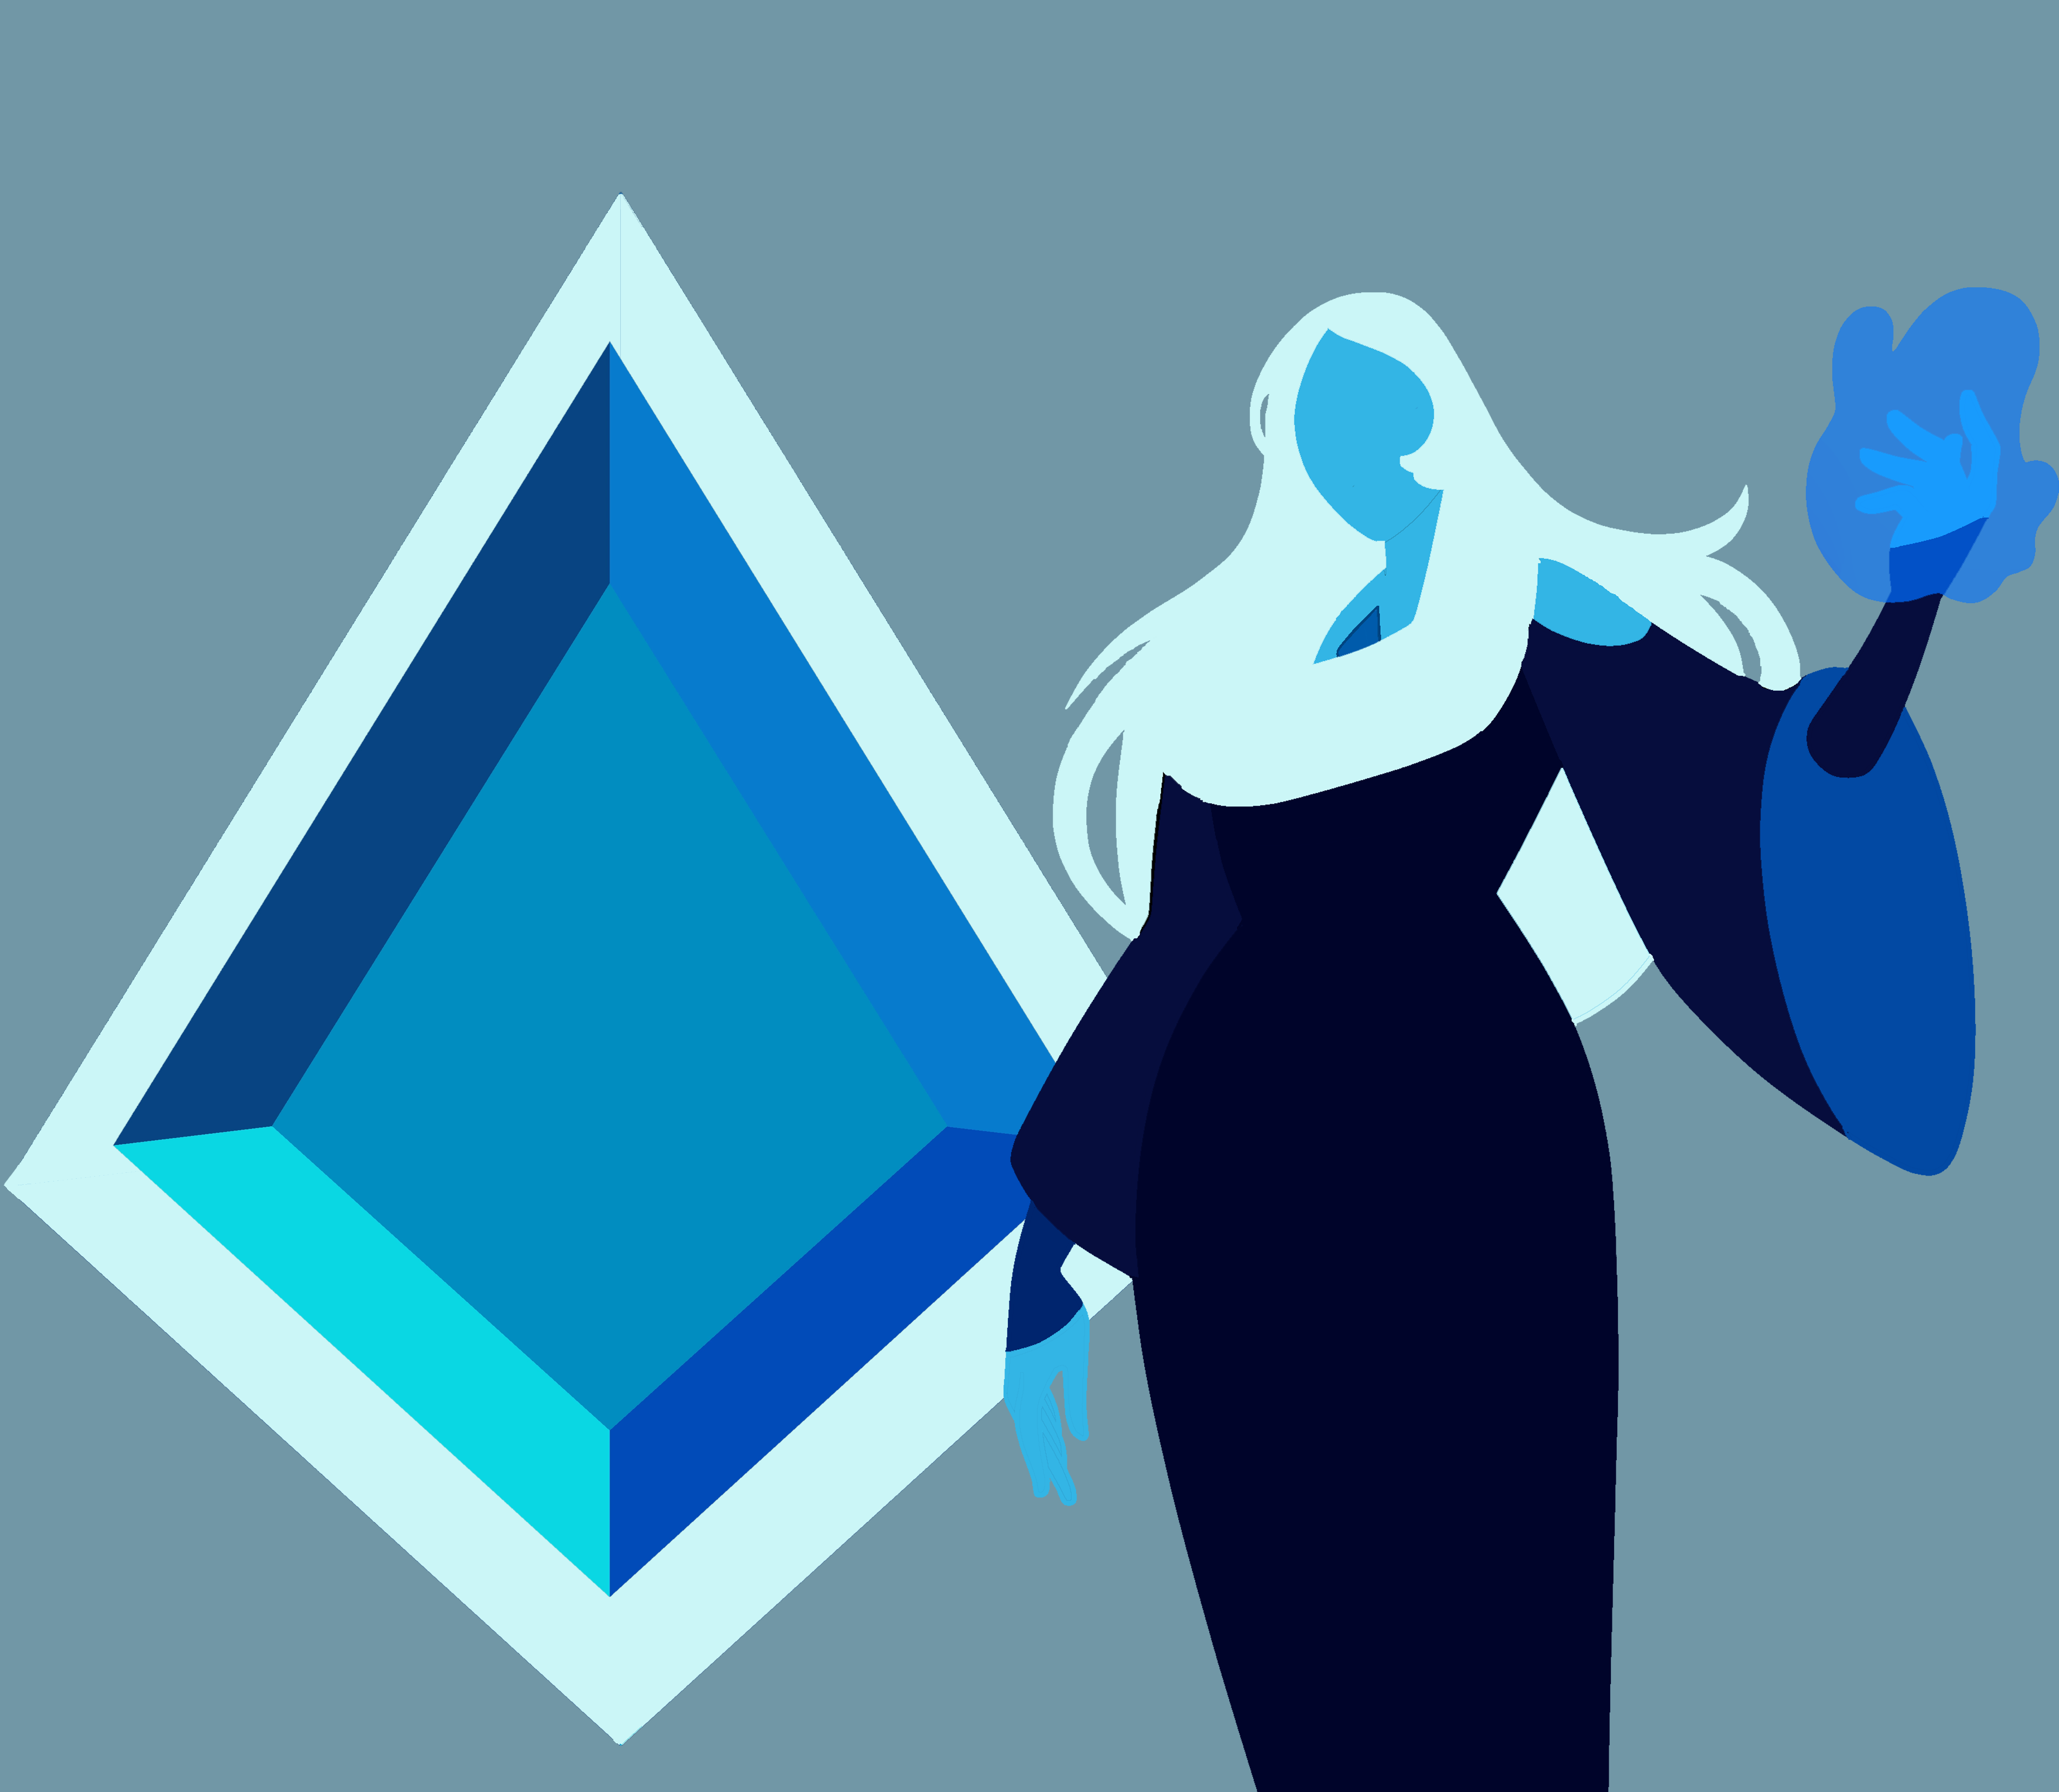 Steven Universe Diamond Wallpapers